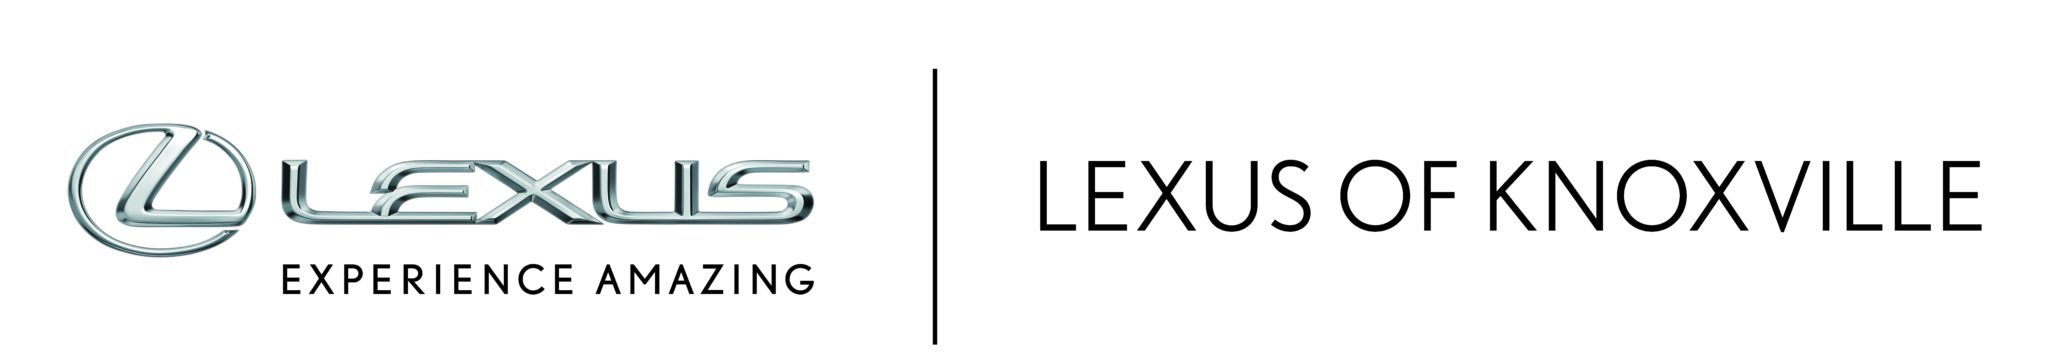 Lexus of Knoxville logo